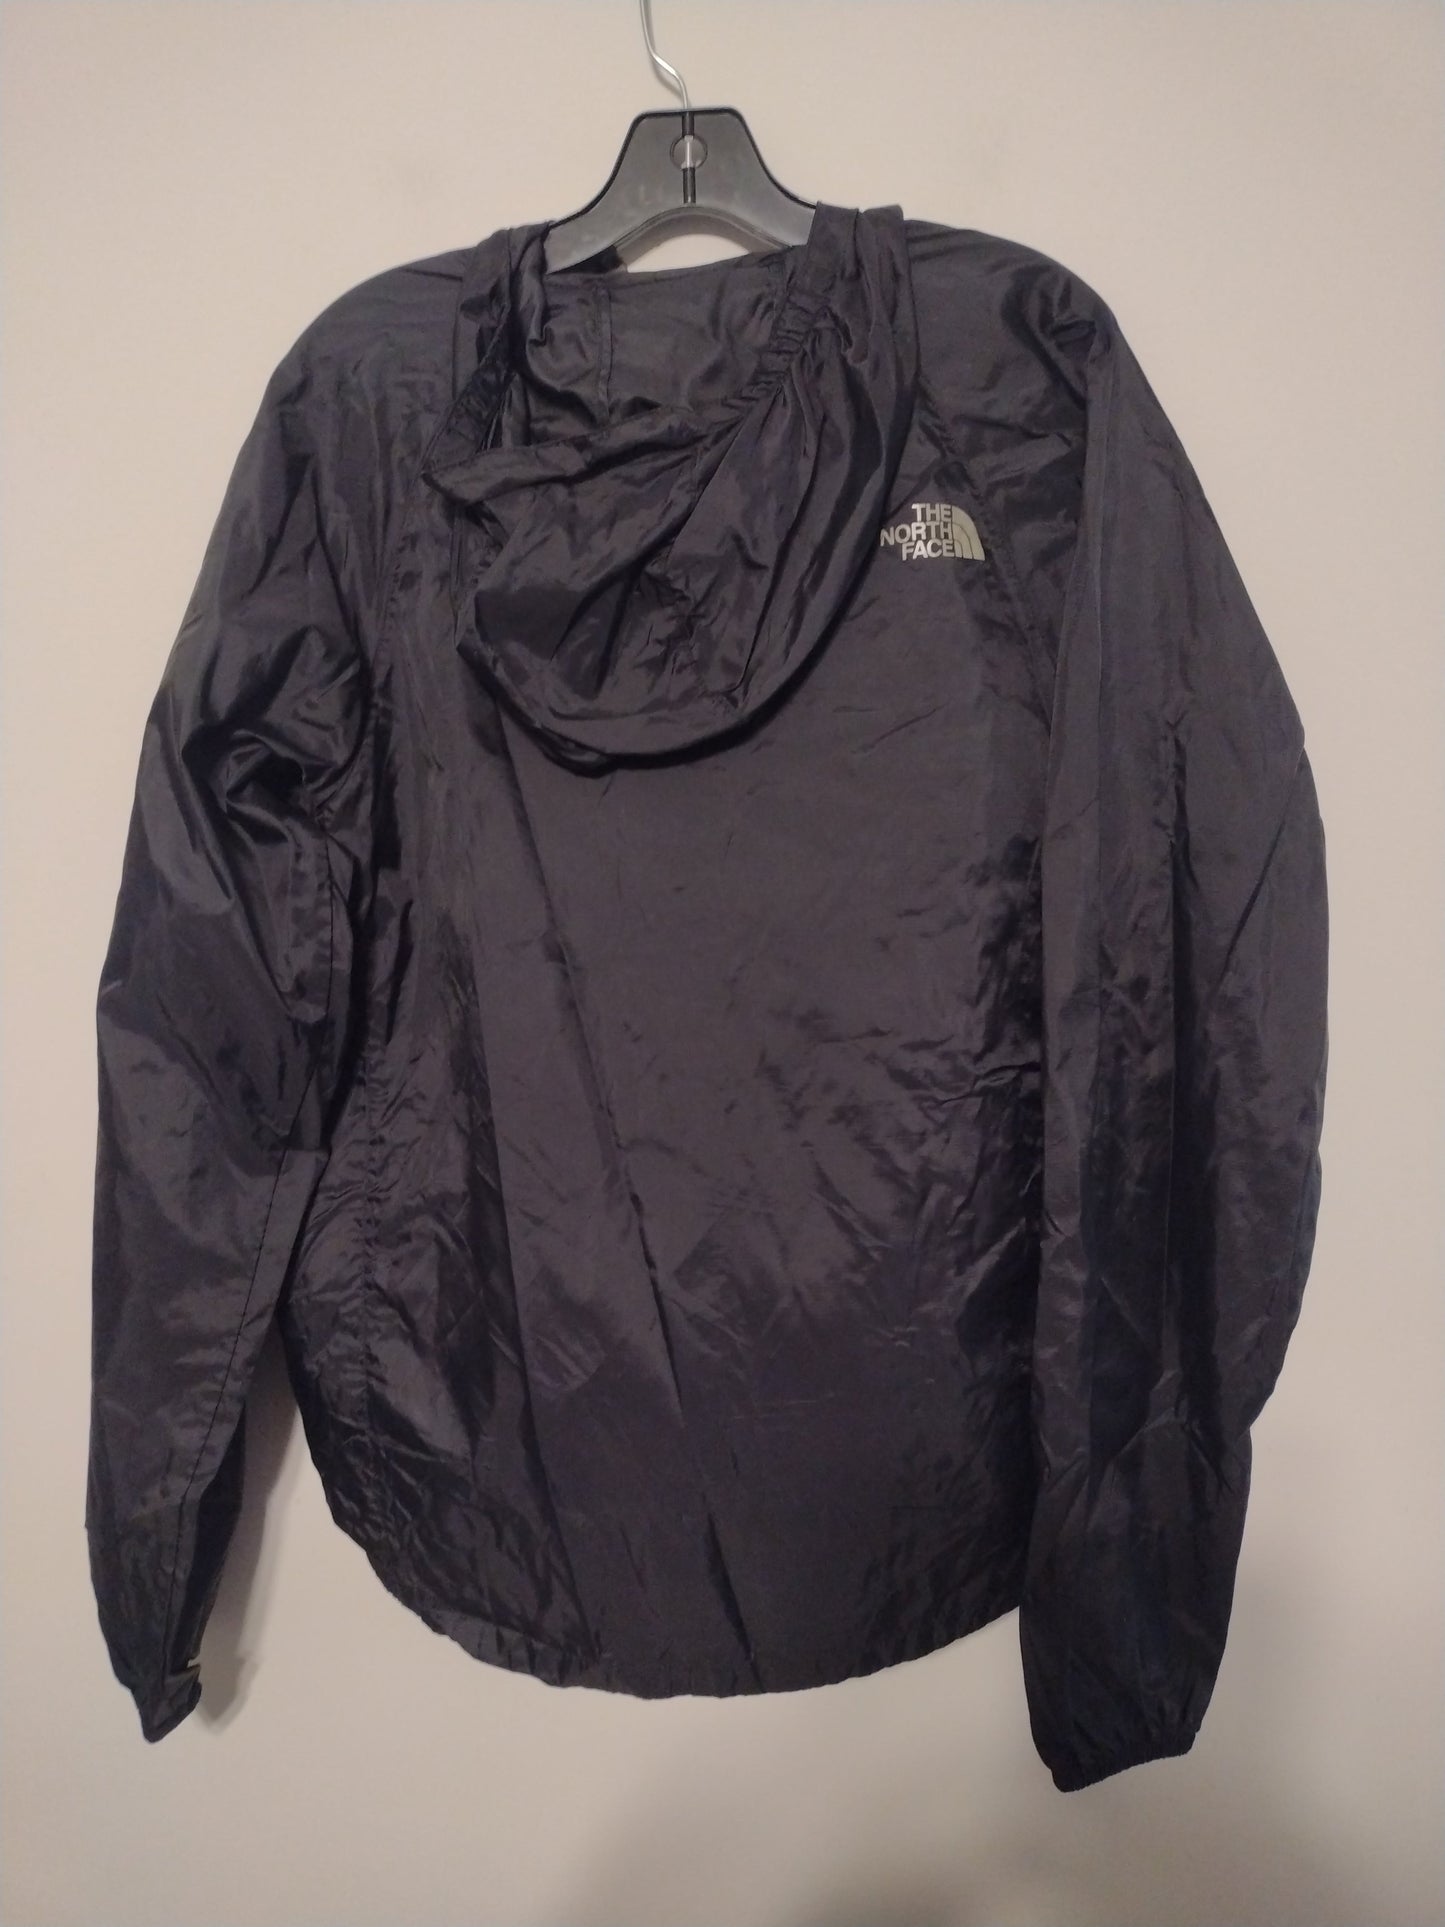 Jacket Windbreaker By North Face  Size: M